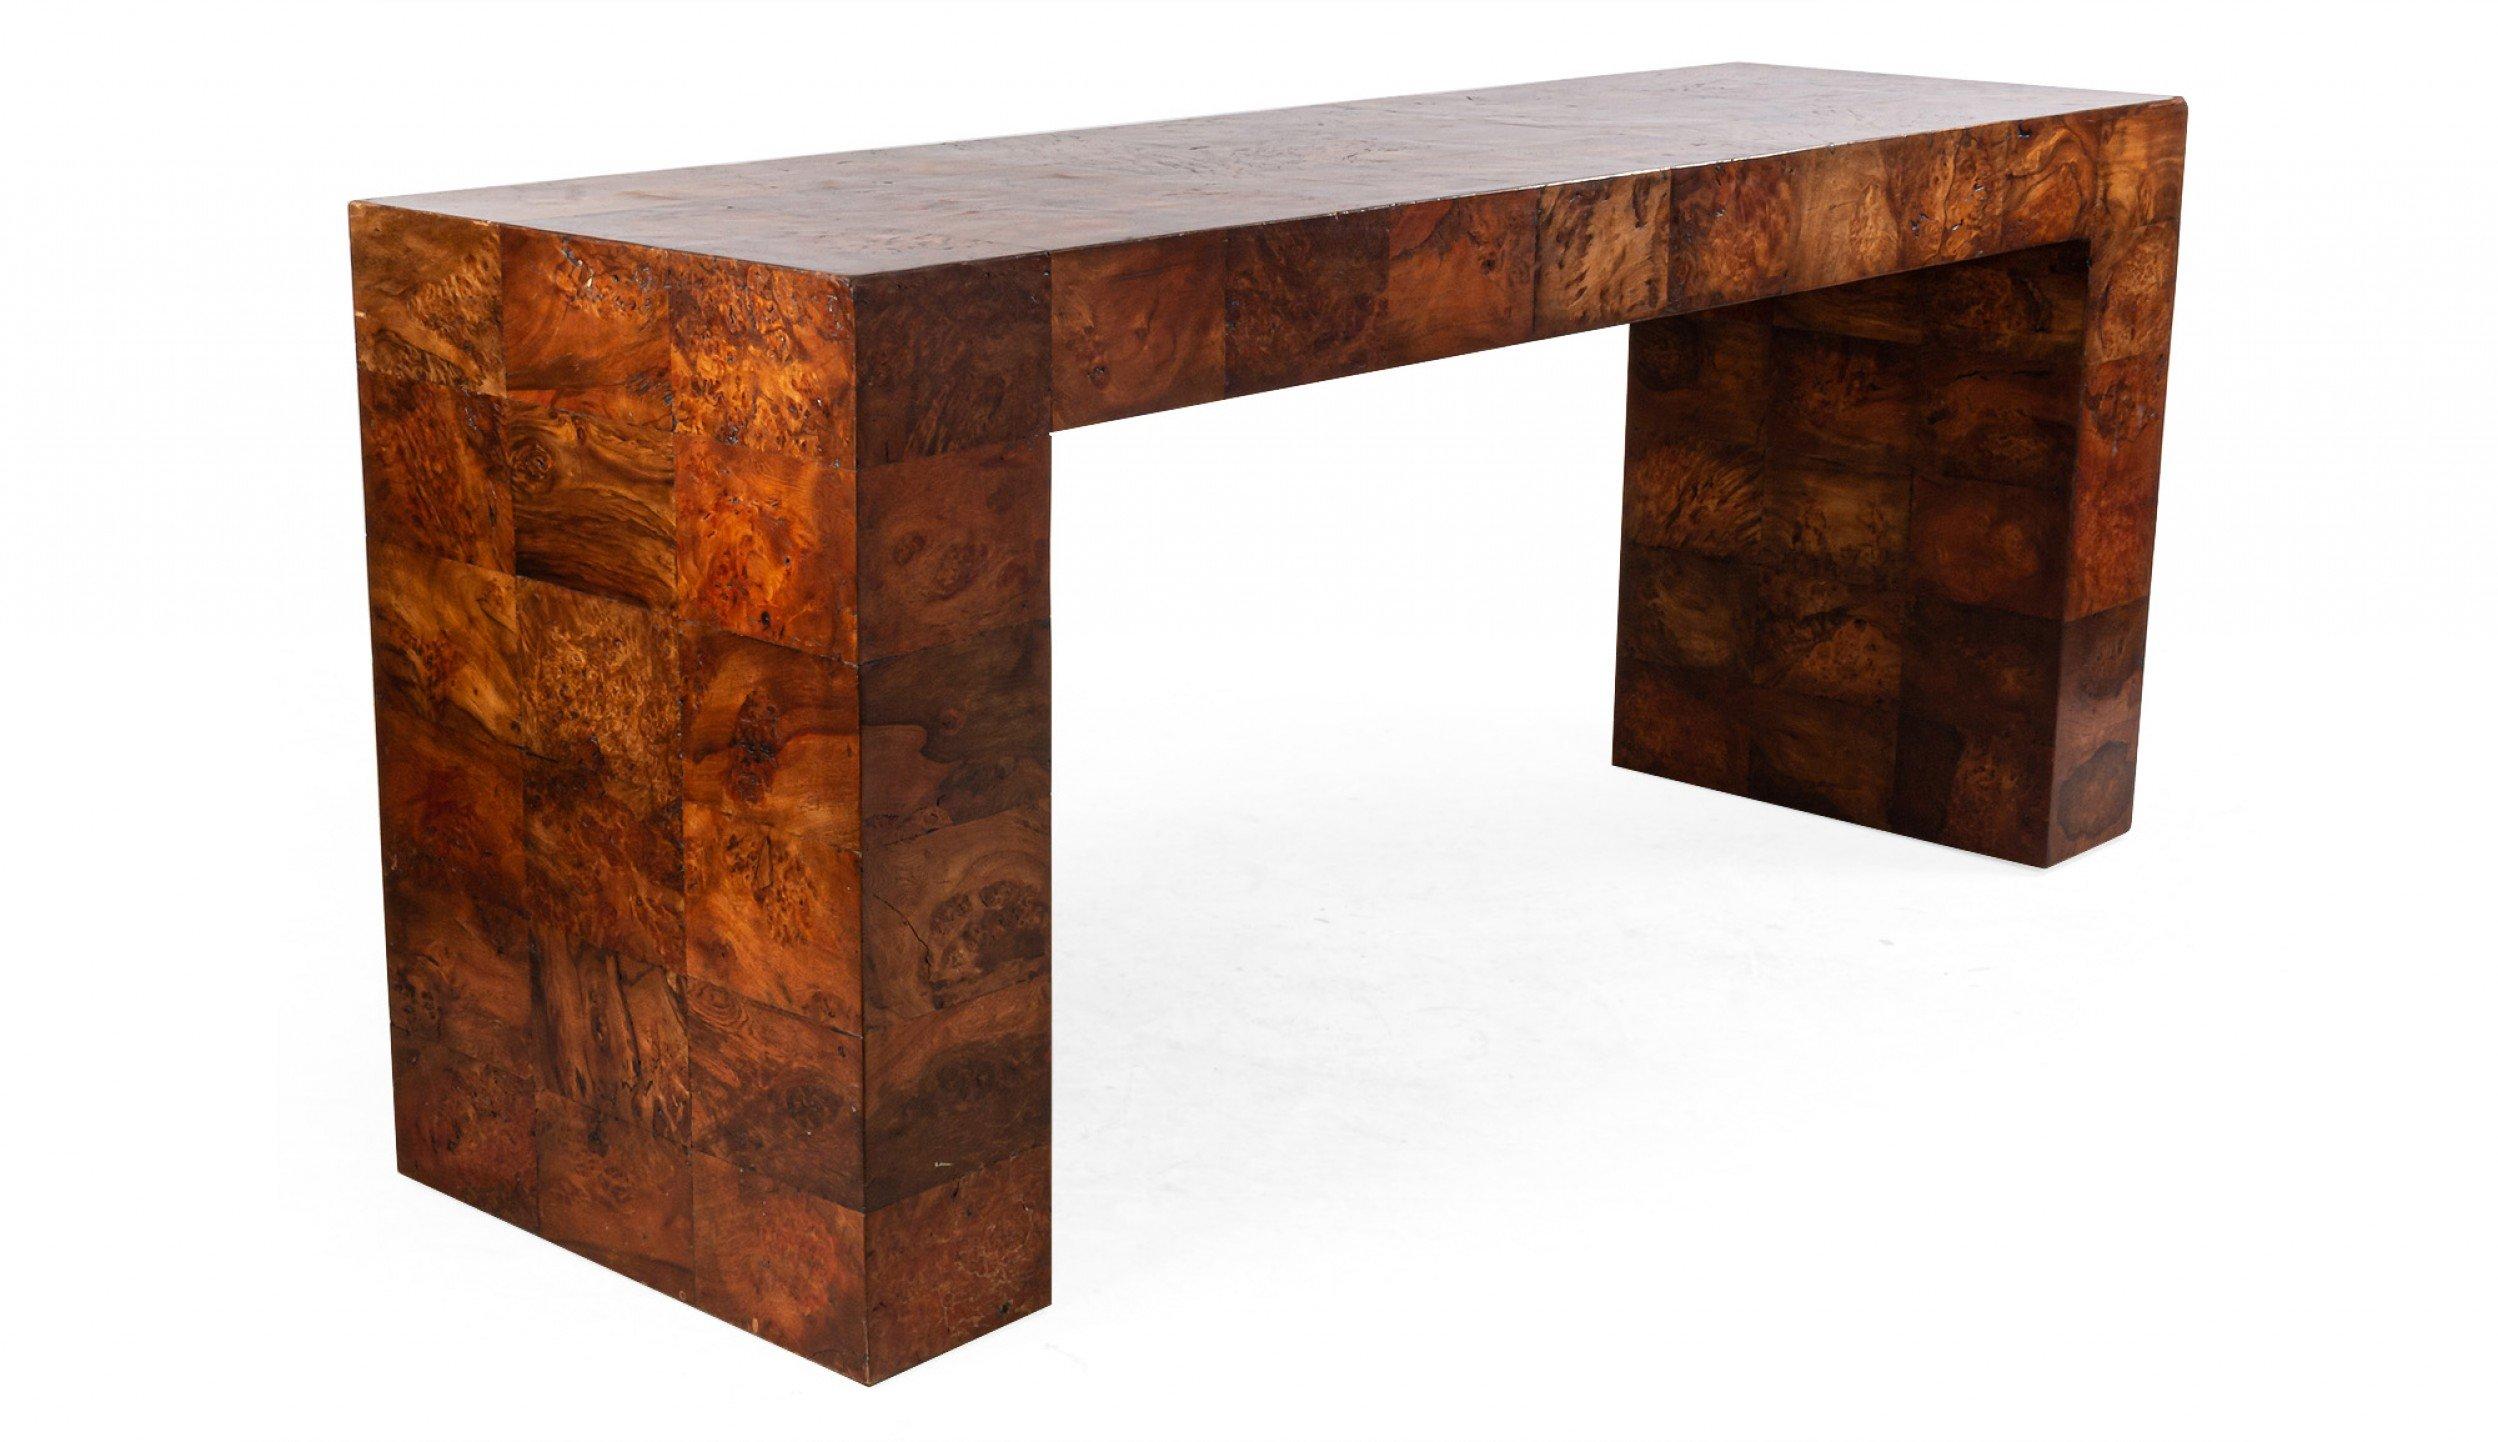 Midcentury large burl veneer wood patchwork rectangular console table attributed to Paul Evans.